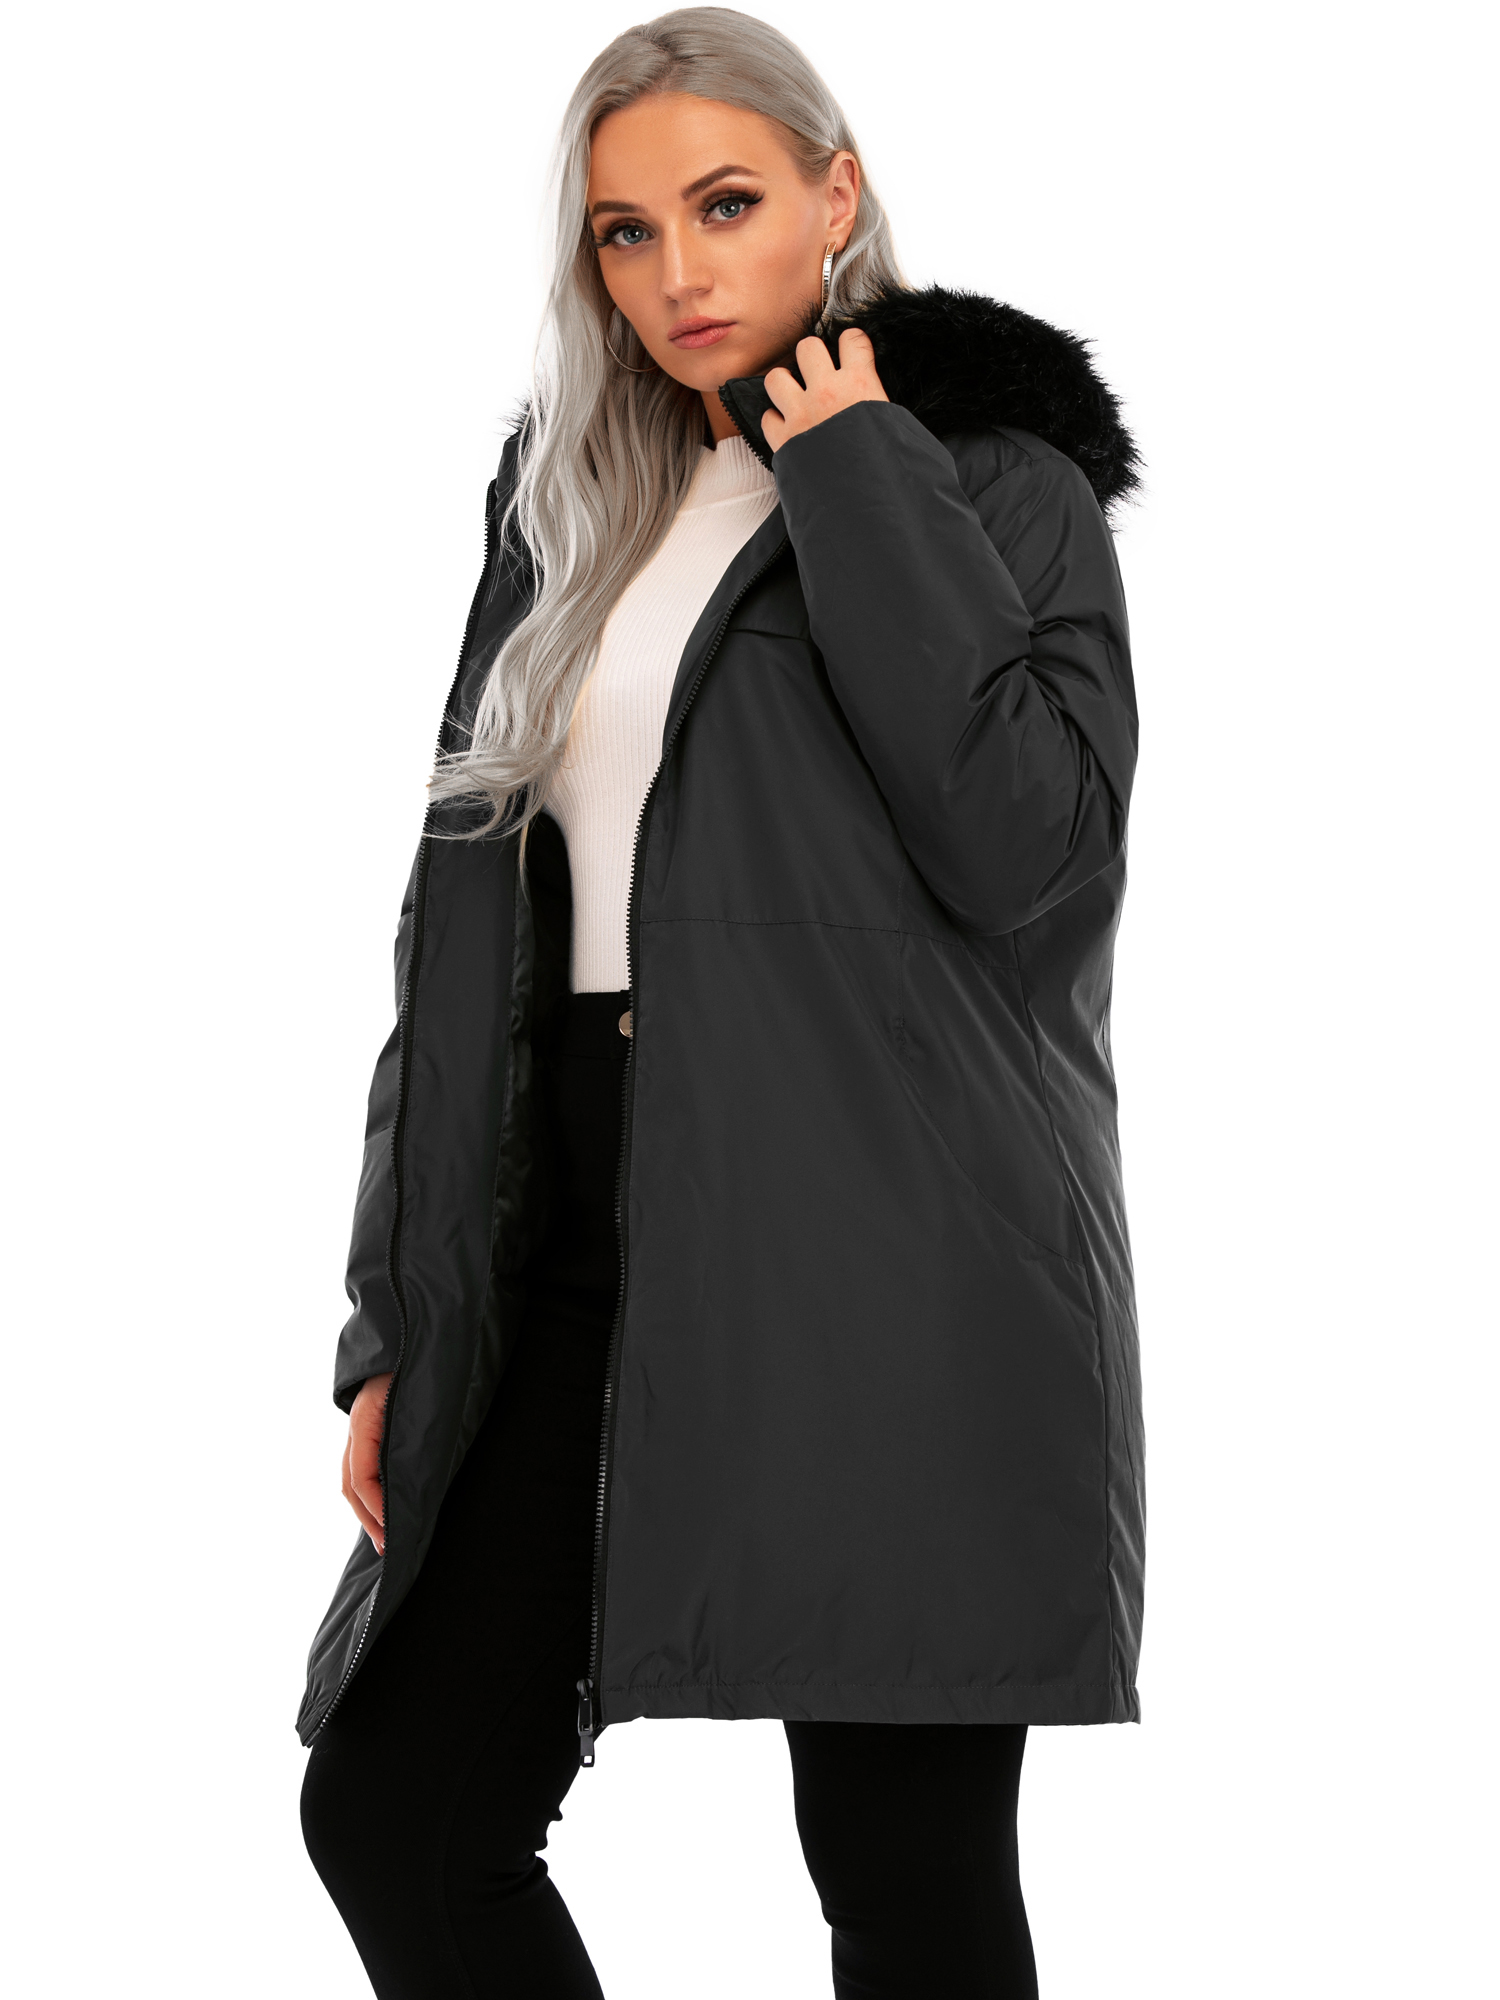 LELINTA Women's Plus Size Winter Warm Zipper Hoodie Long Jacket Waterproof Jacket Hooded Lightweight Raincoat Active Outdoor Trench Coat - image 5 of 7